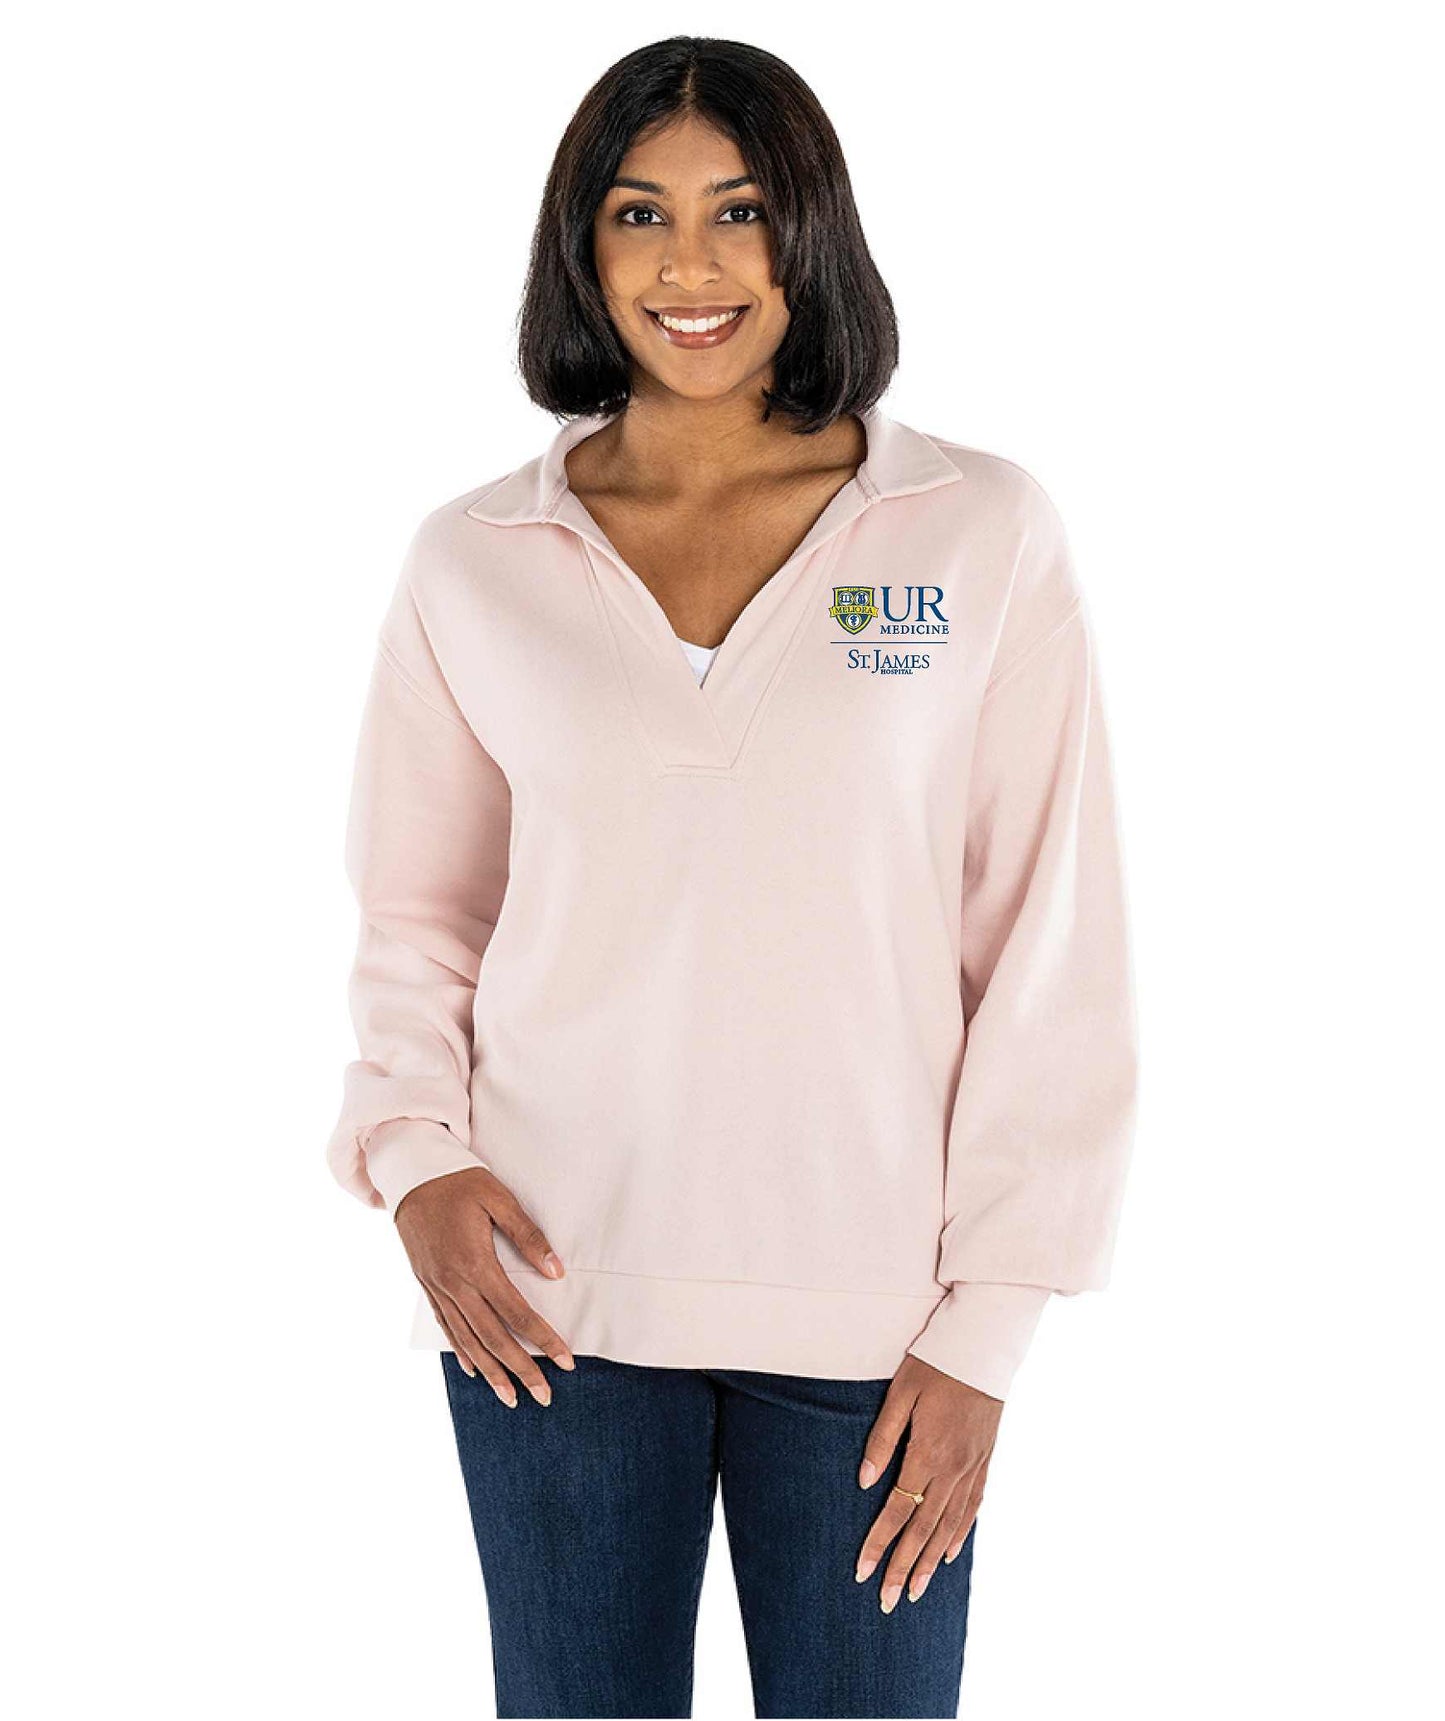 UR Medicine Ladies Charles River Coastal Sweatshirt 5483